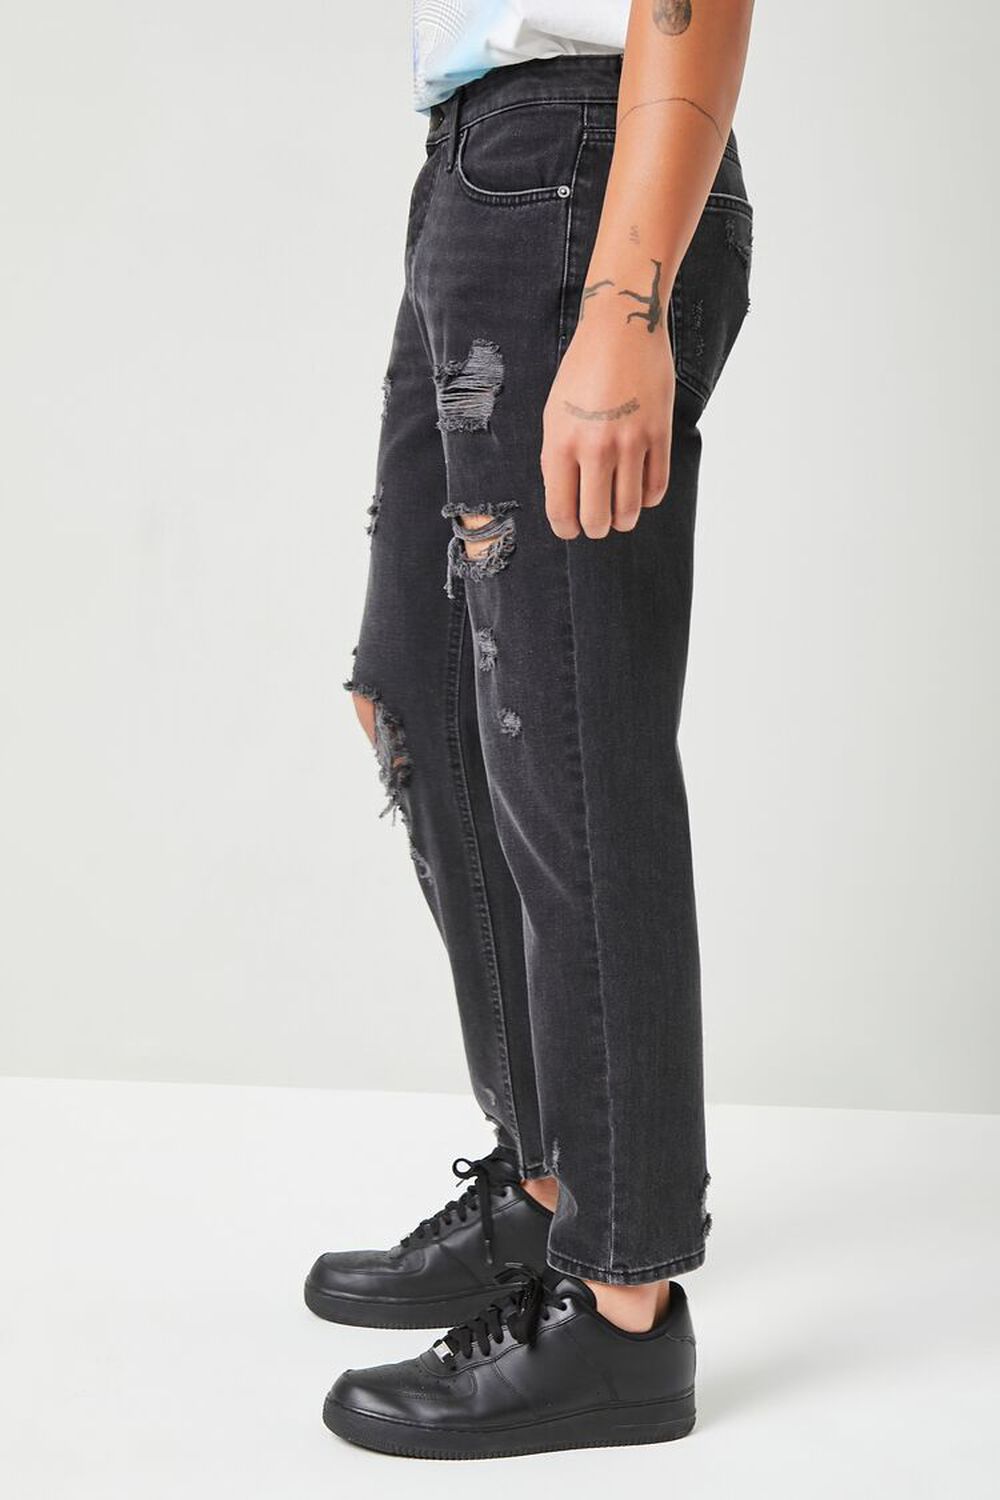 WASHED BLACK Distressed Slim-Fit Jeans, image 3